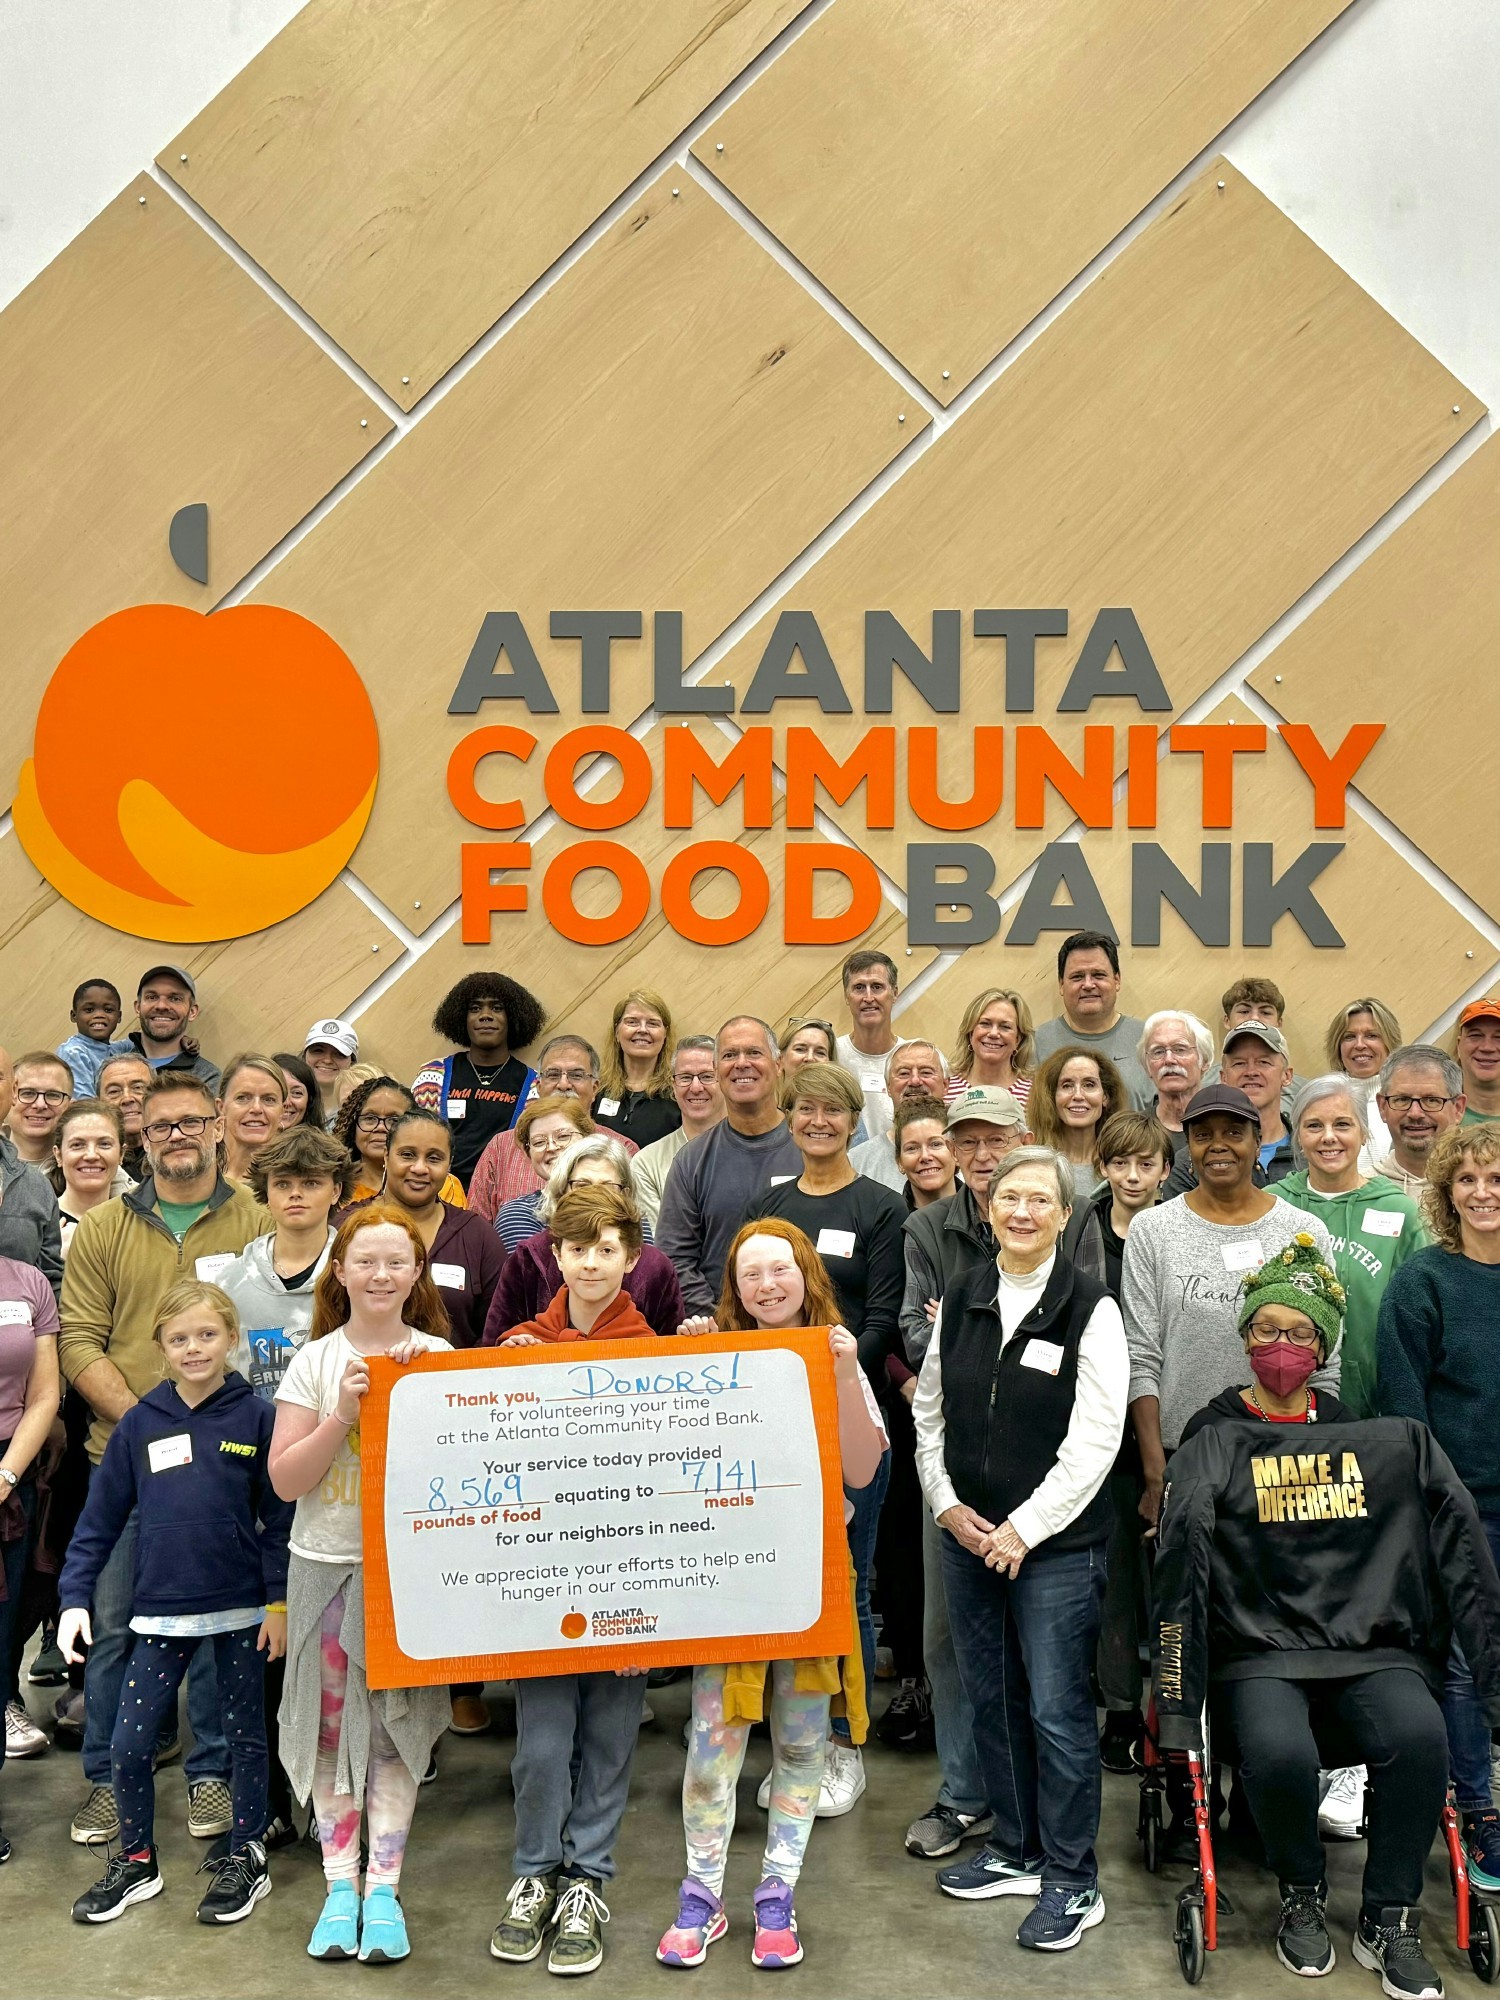 Volunteer Event at Atlanta Community Food Bank in ATL.